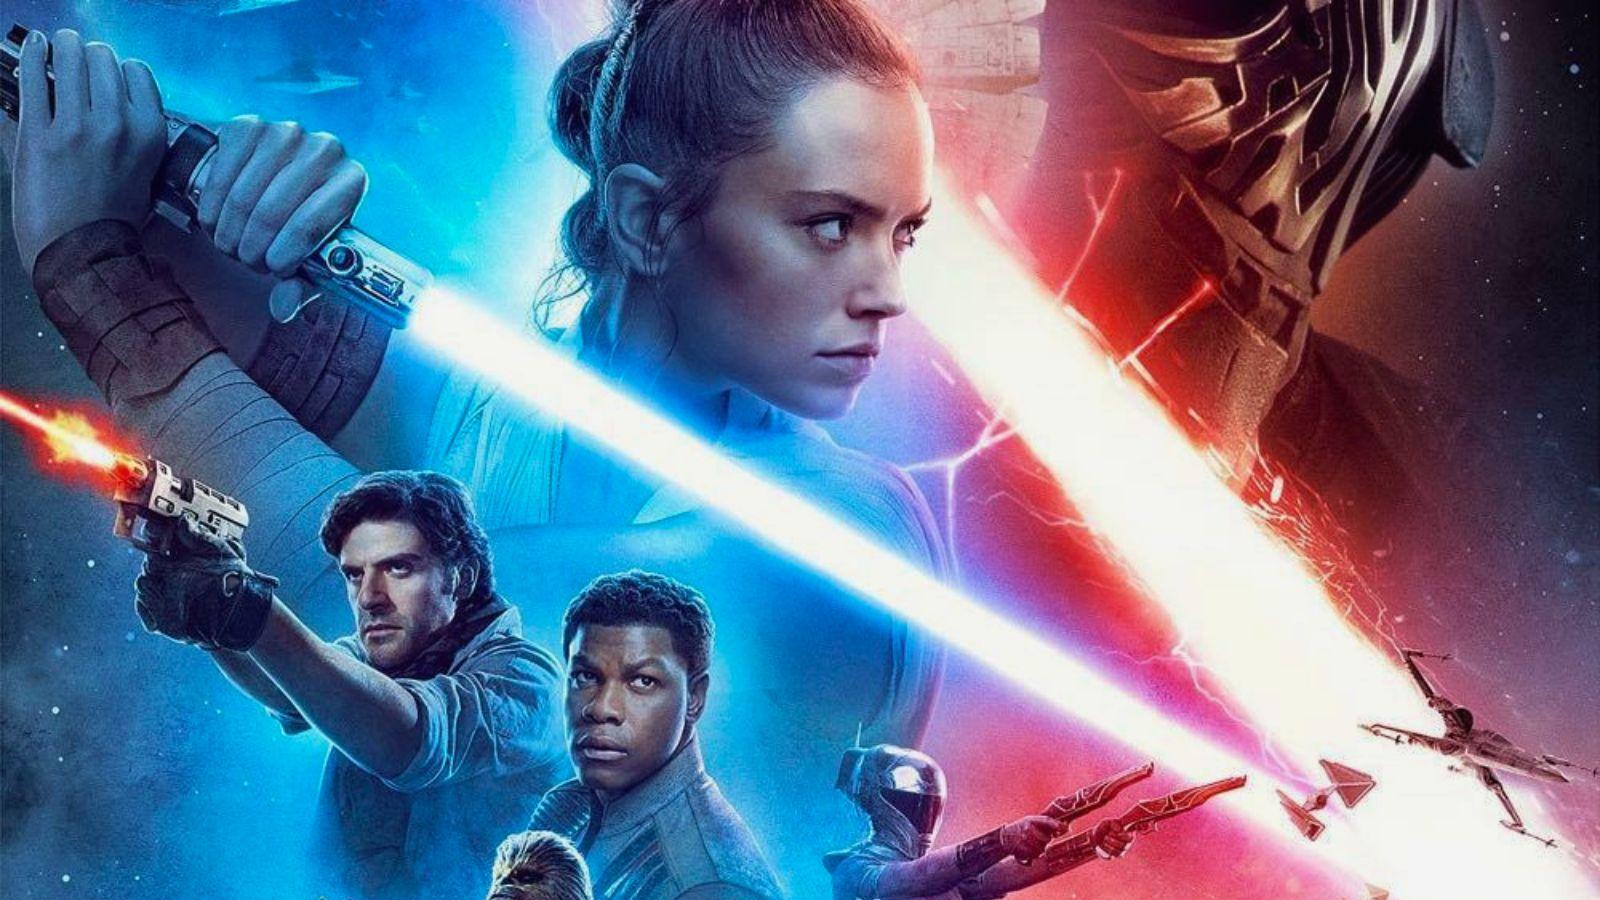 The Rise of Skywalker poster, featuring Daisy Ridley as Rey, Adam Driver as Kylo Ren, Oscar Isaac as Poe Dameron, and John Boyega as Finn.